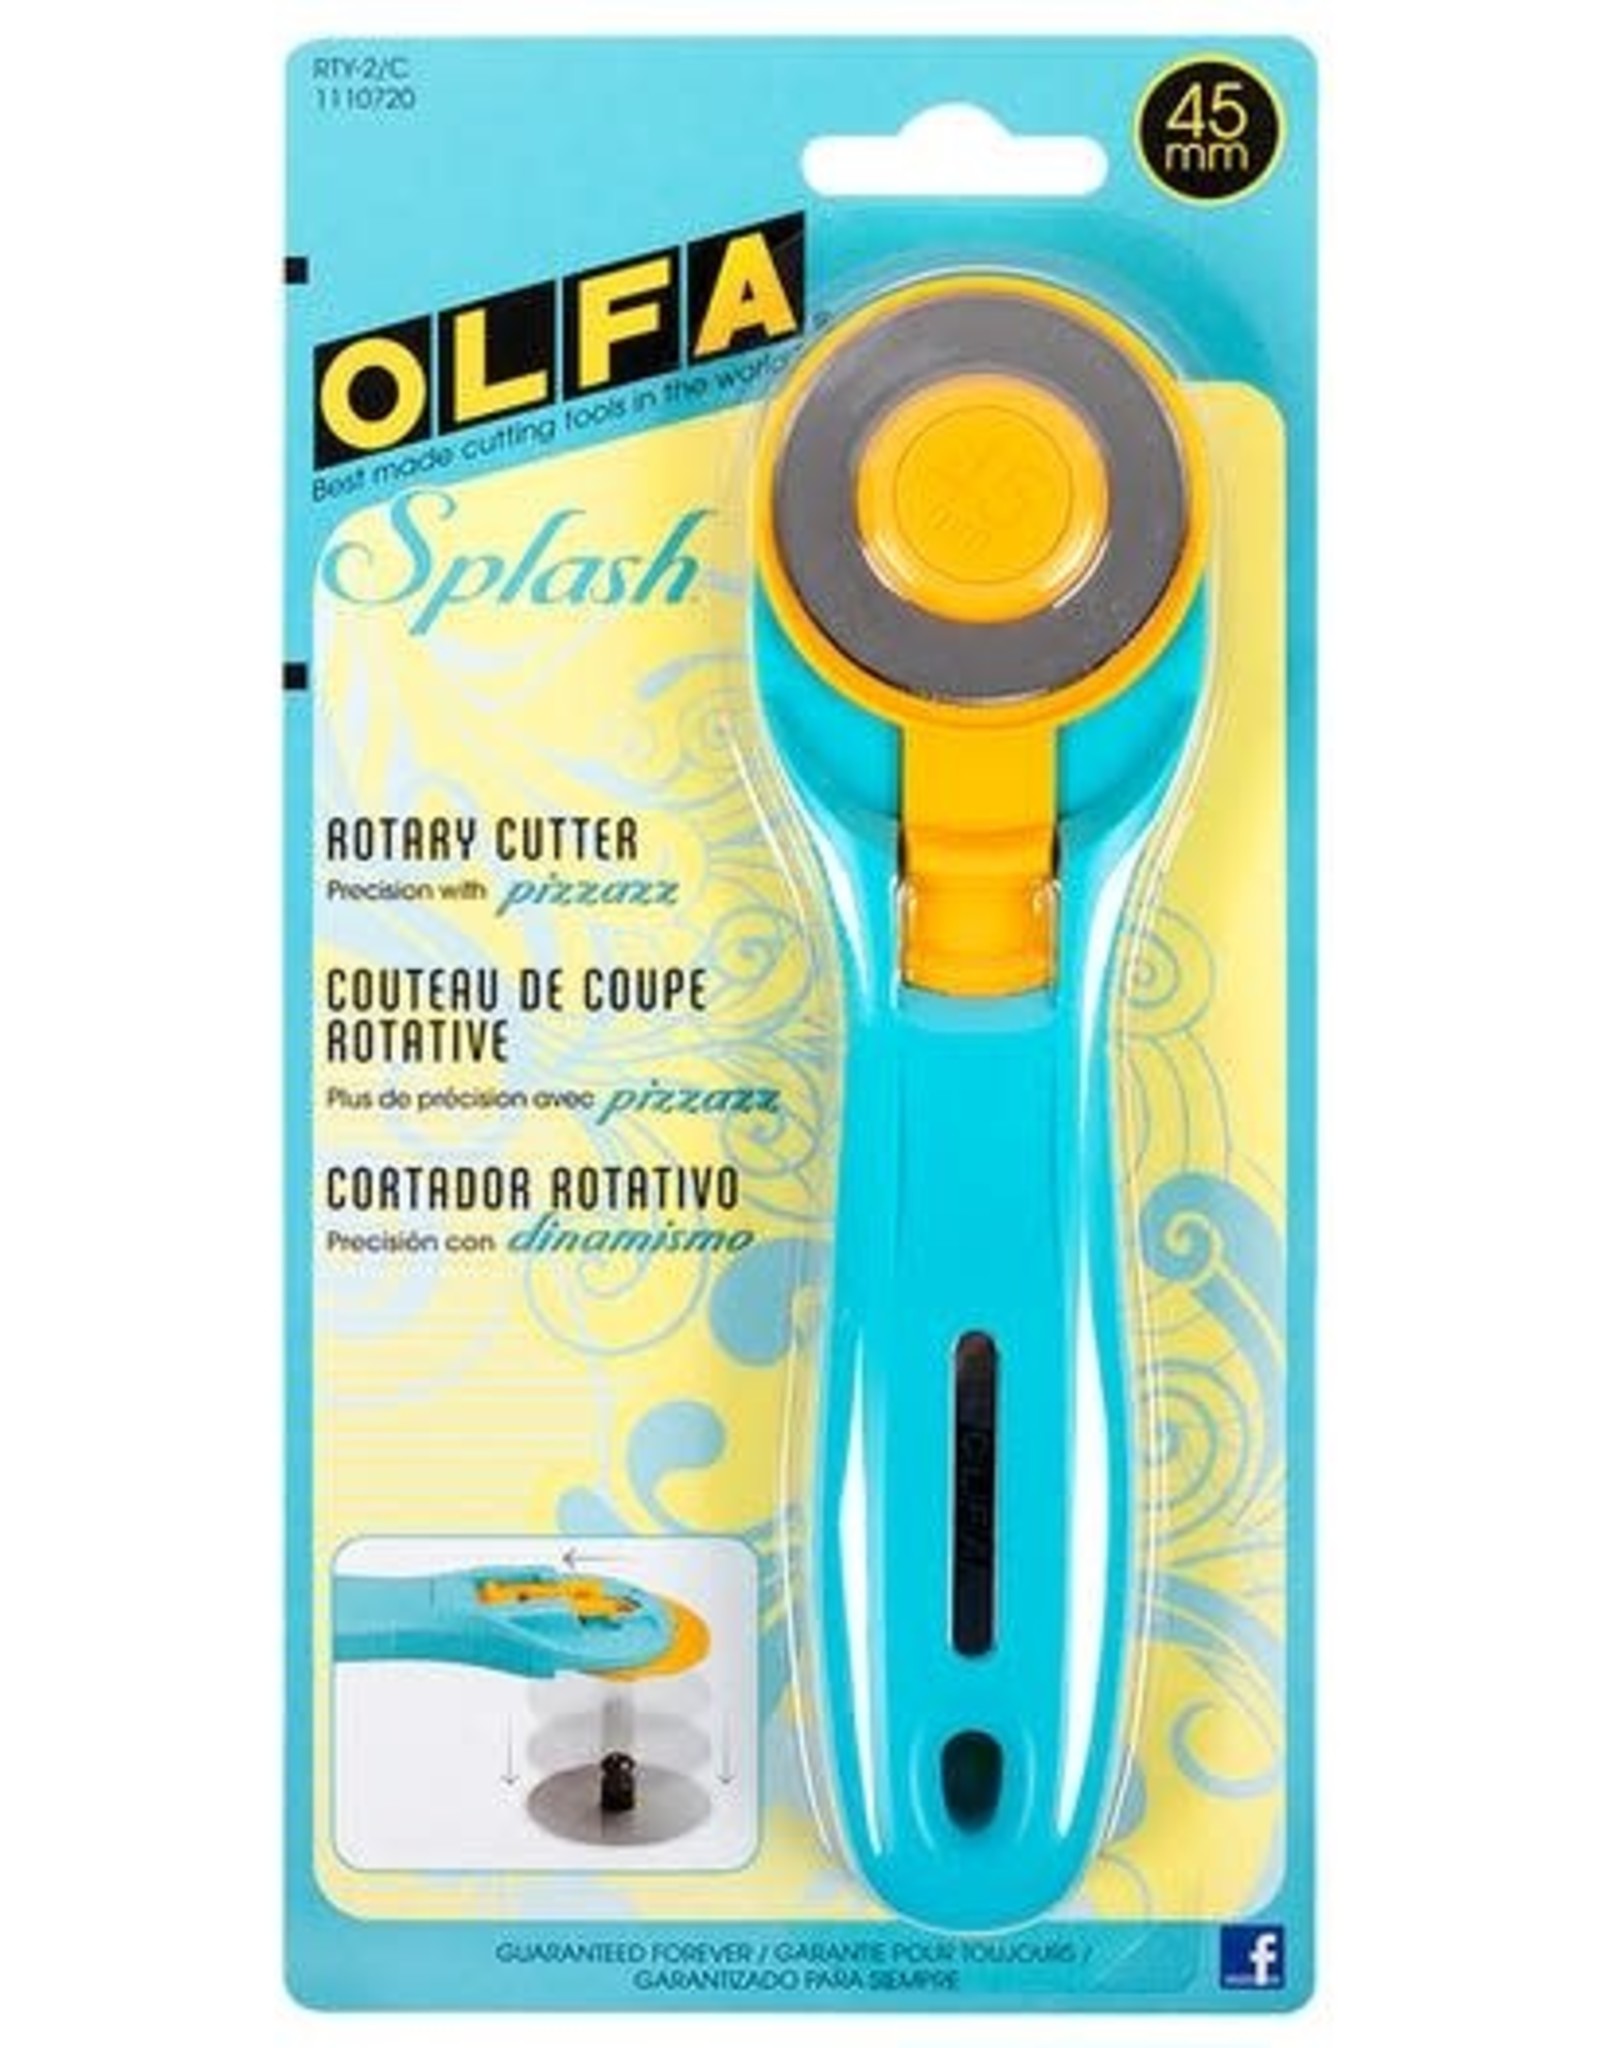 OLFA Splash Rotary Cutter Aqua